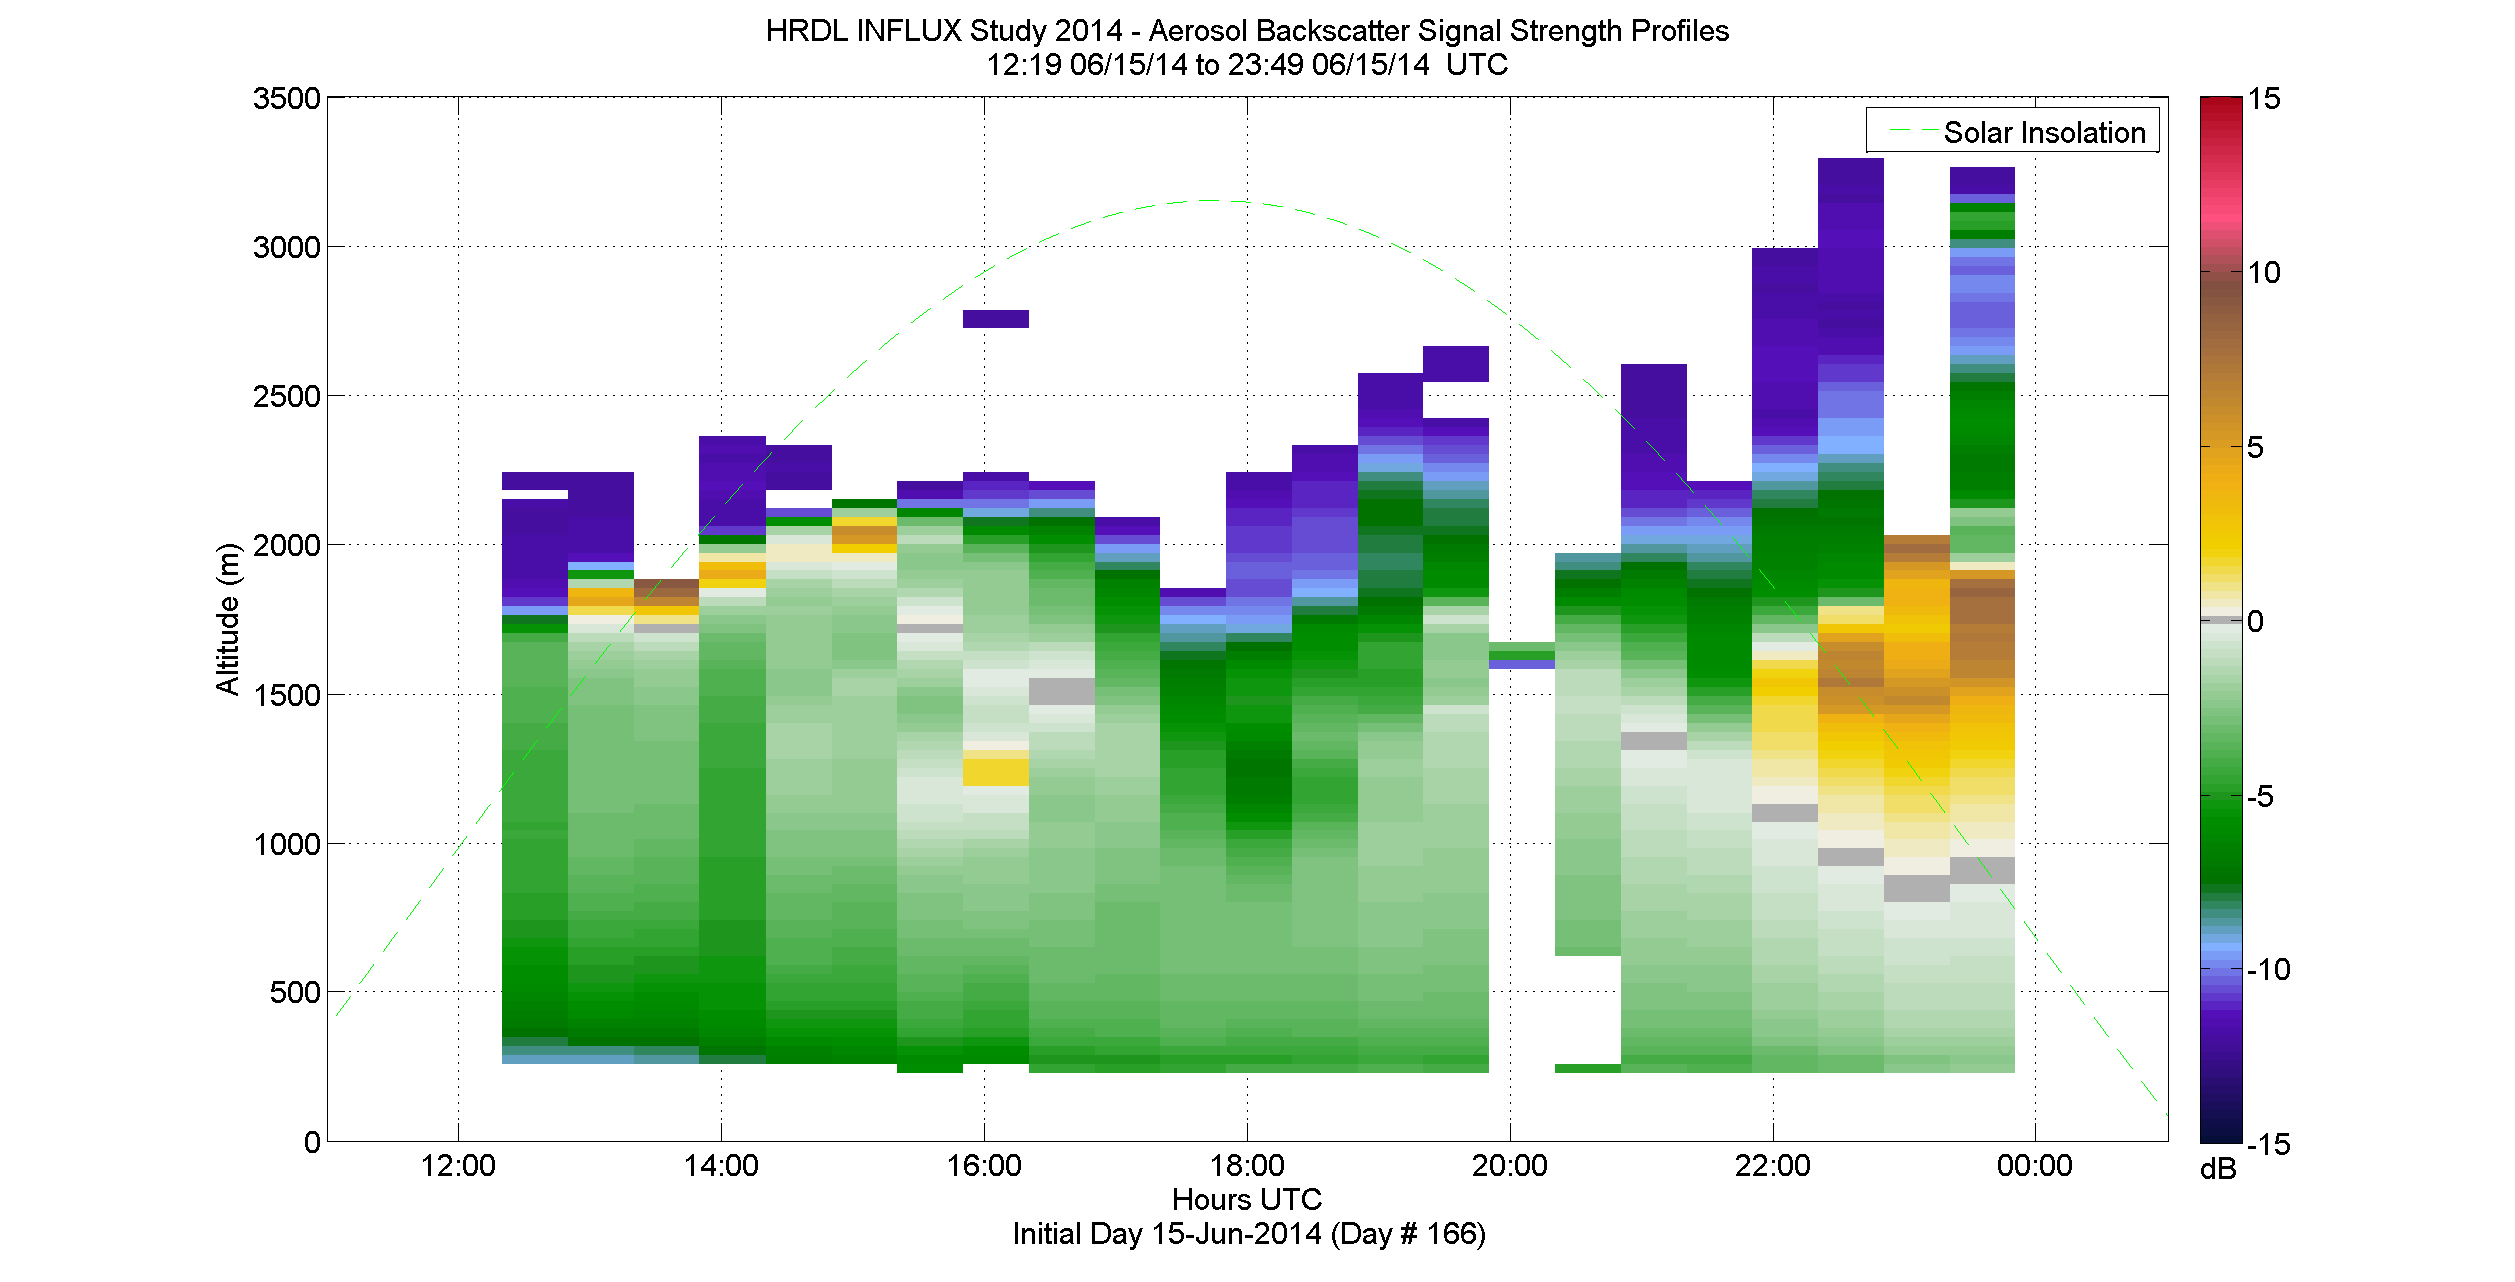 HRDL aerosol backscatter signal strength profile - June 15 pm